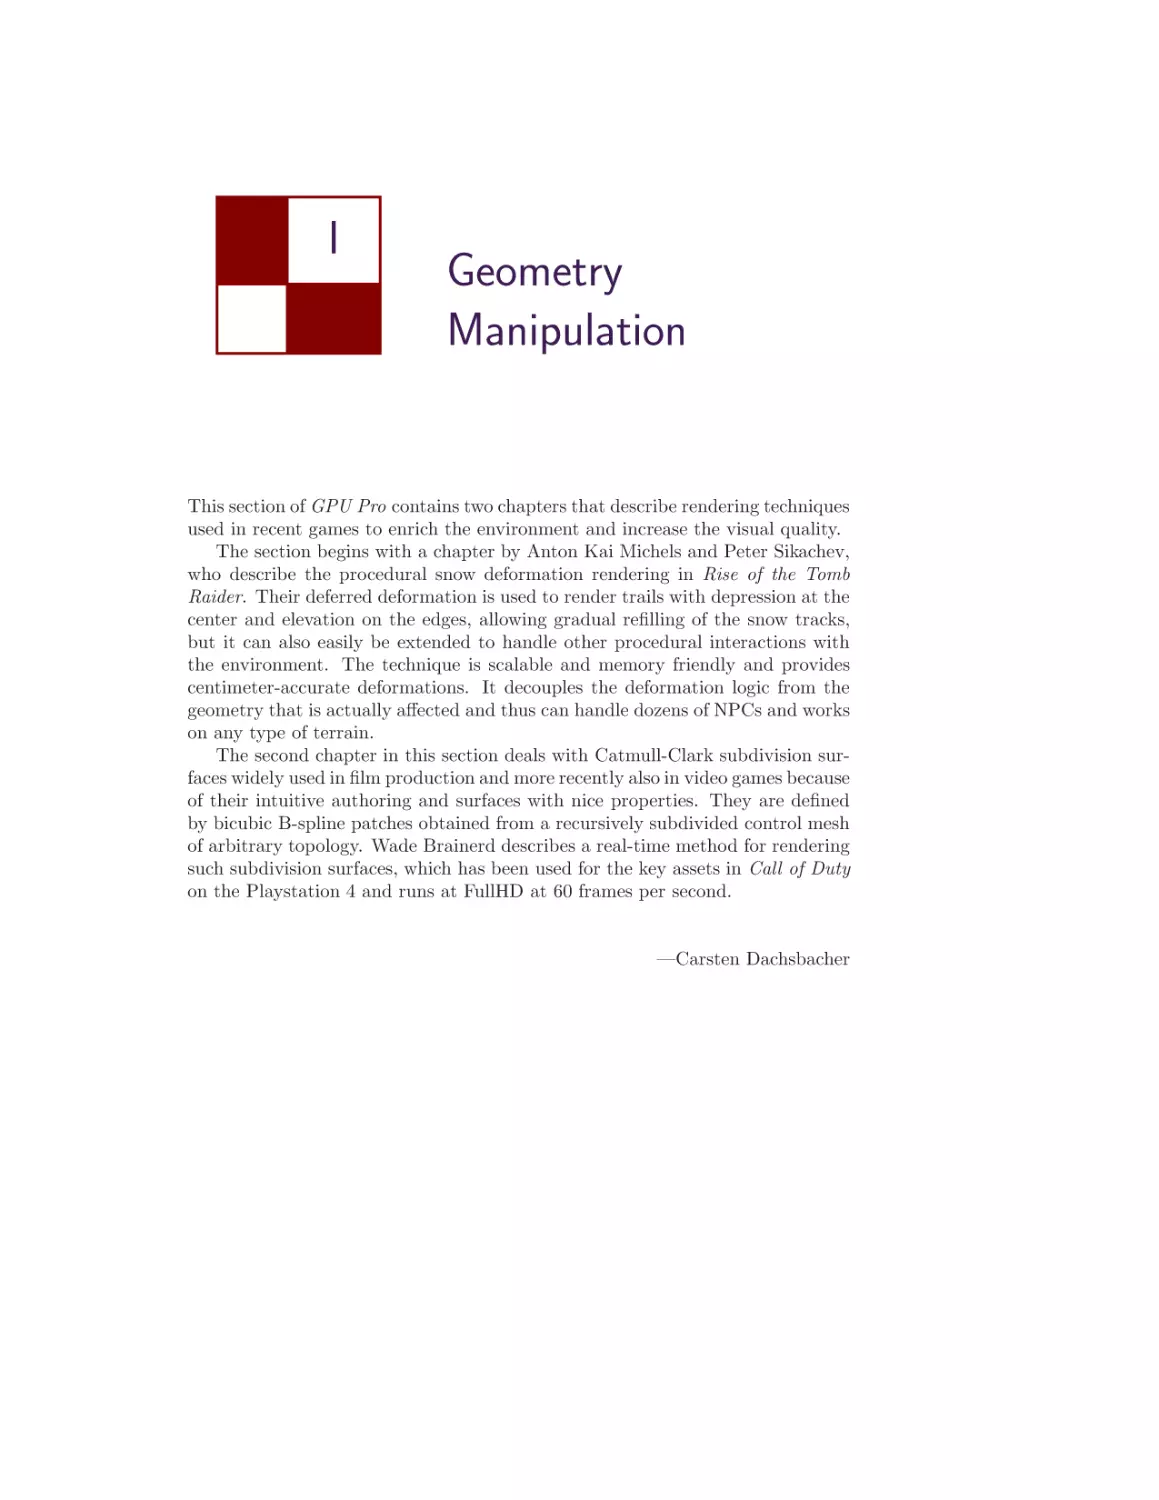 I. Geometry Manipulation